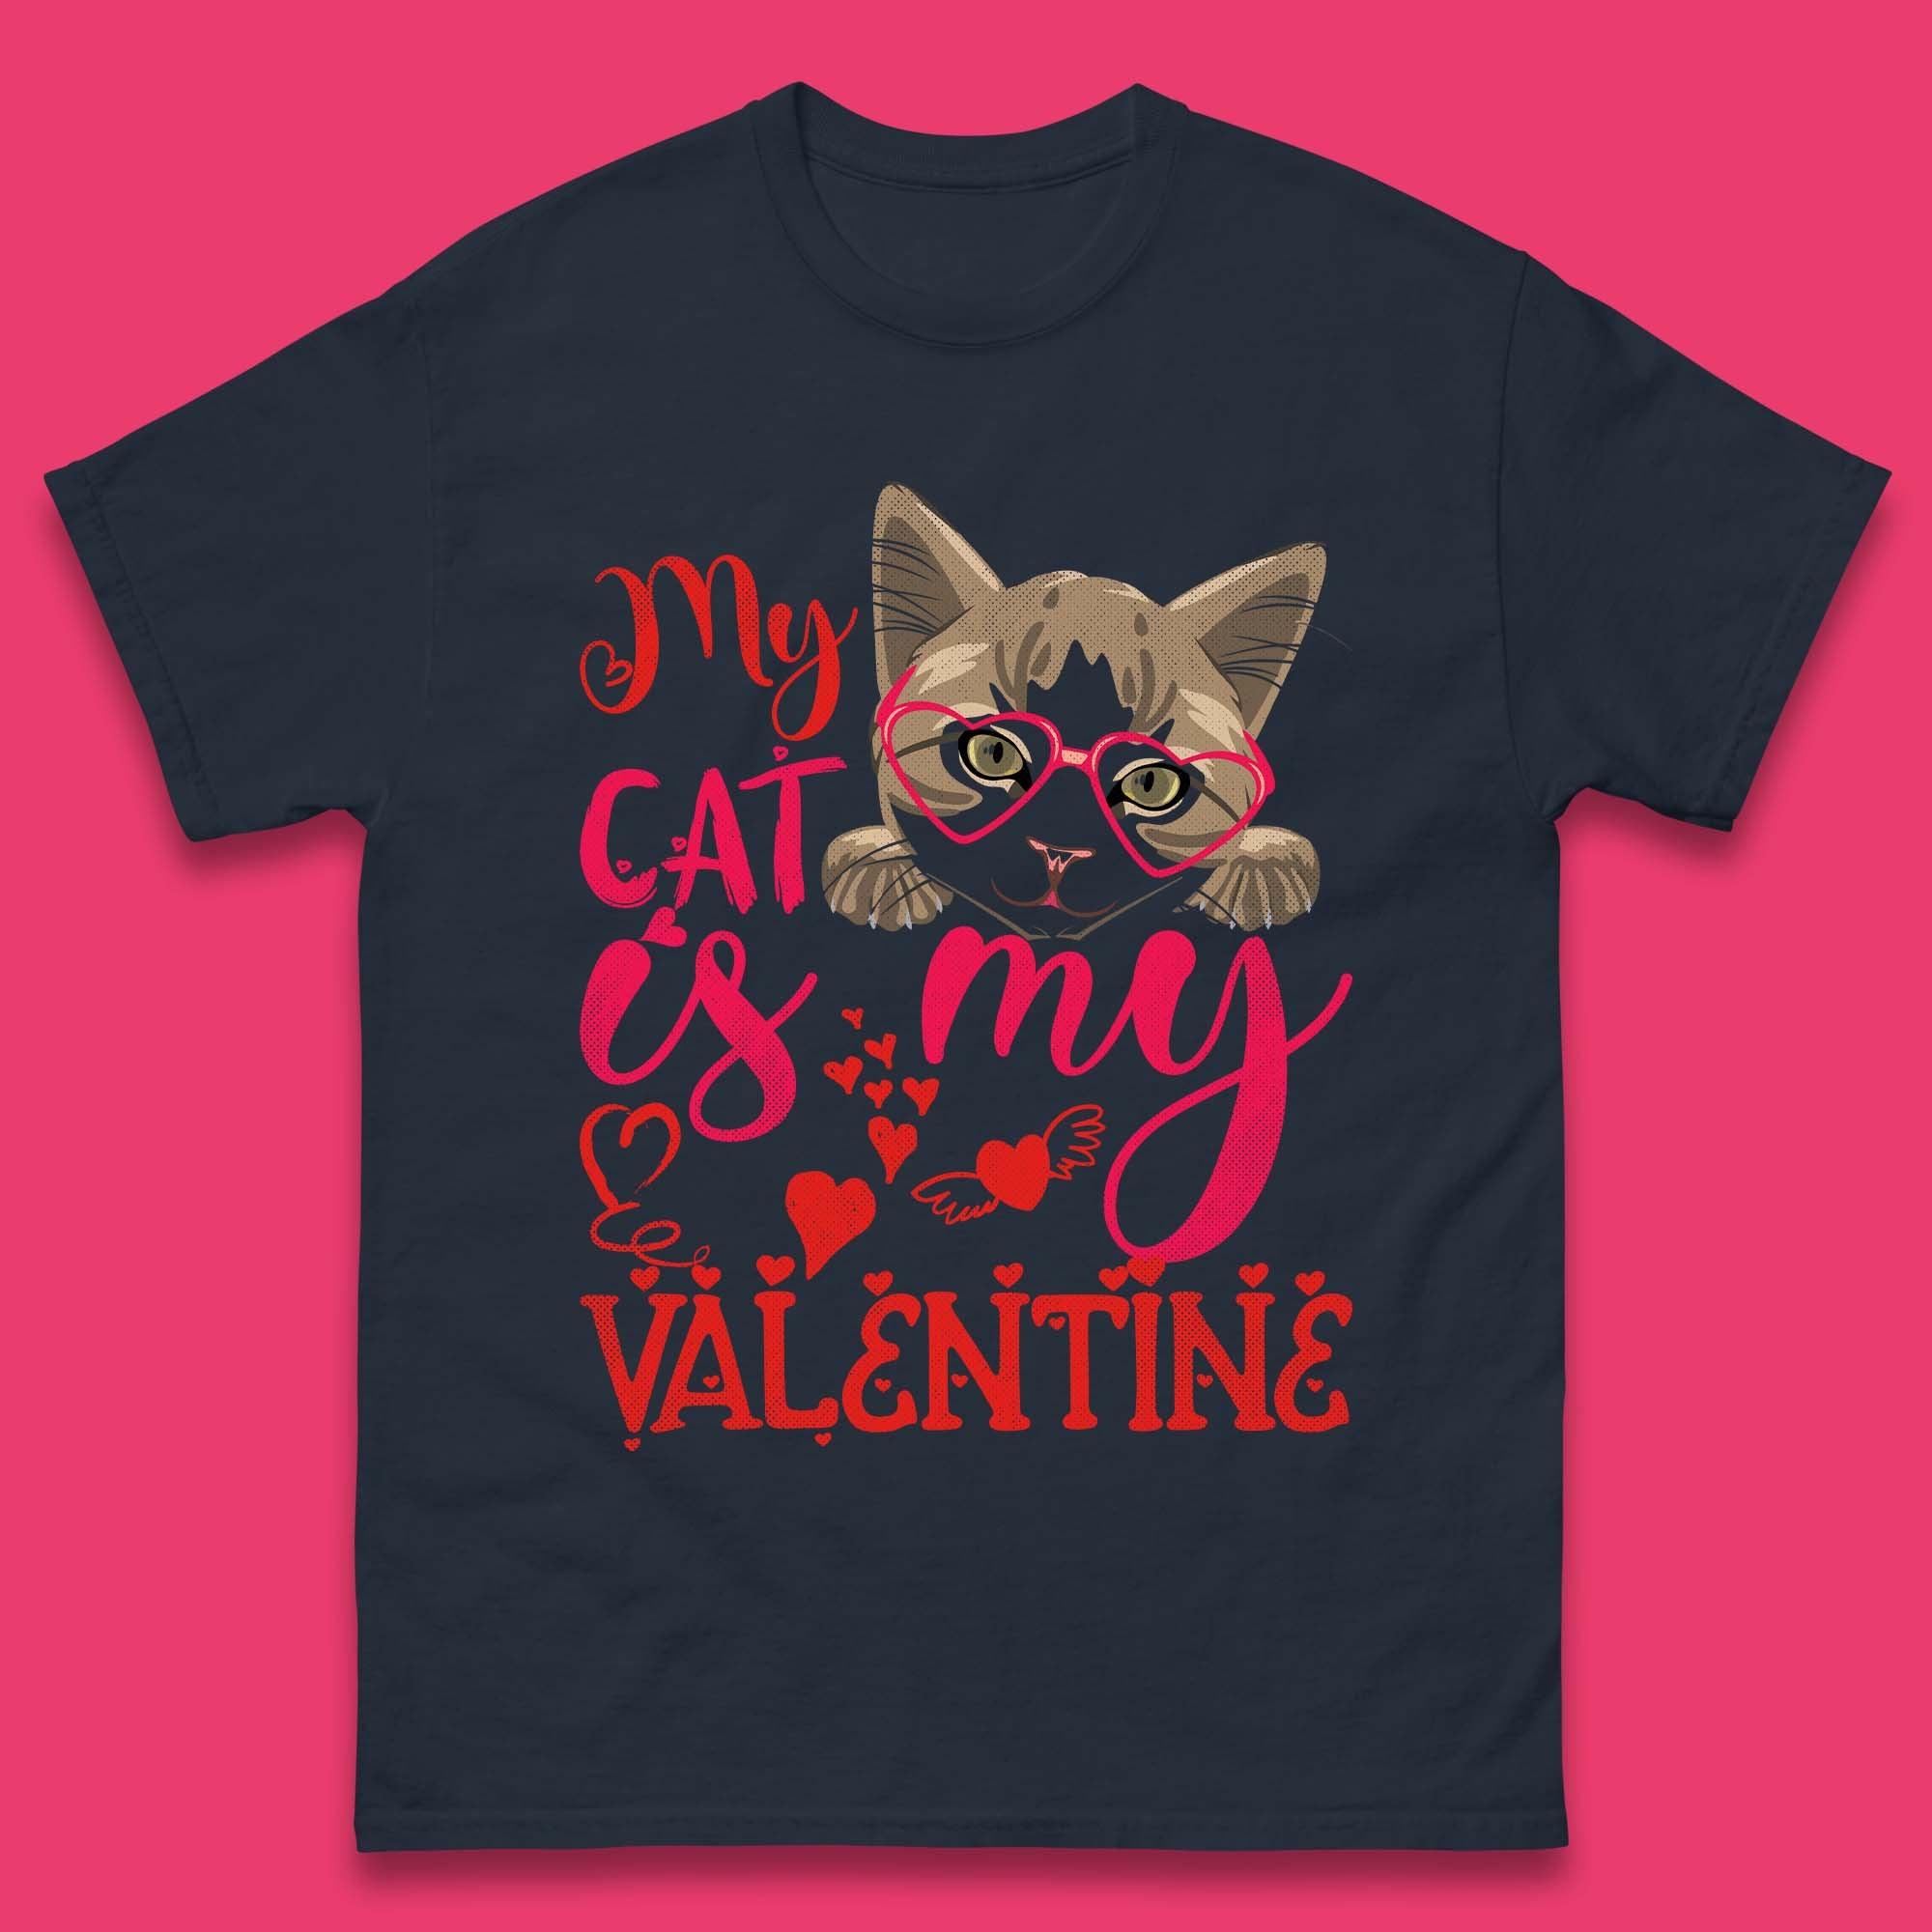 My Cat Is My Valentine Mens T-Shirt